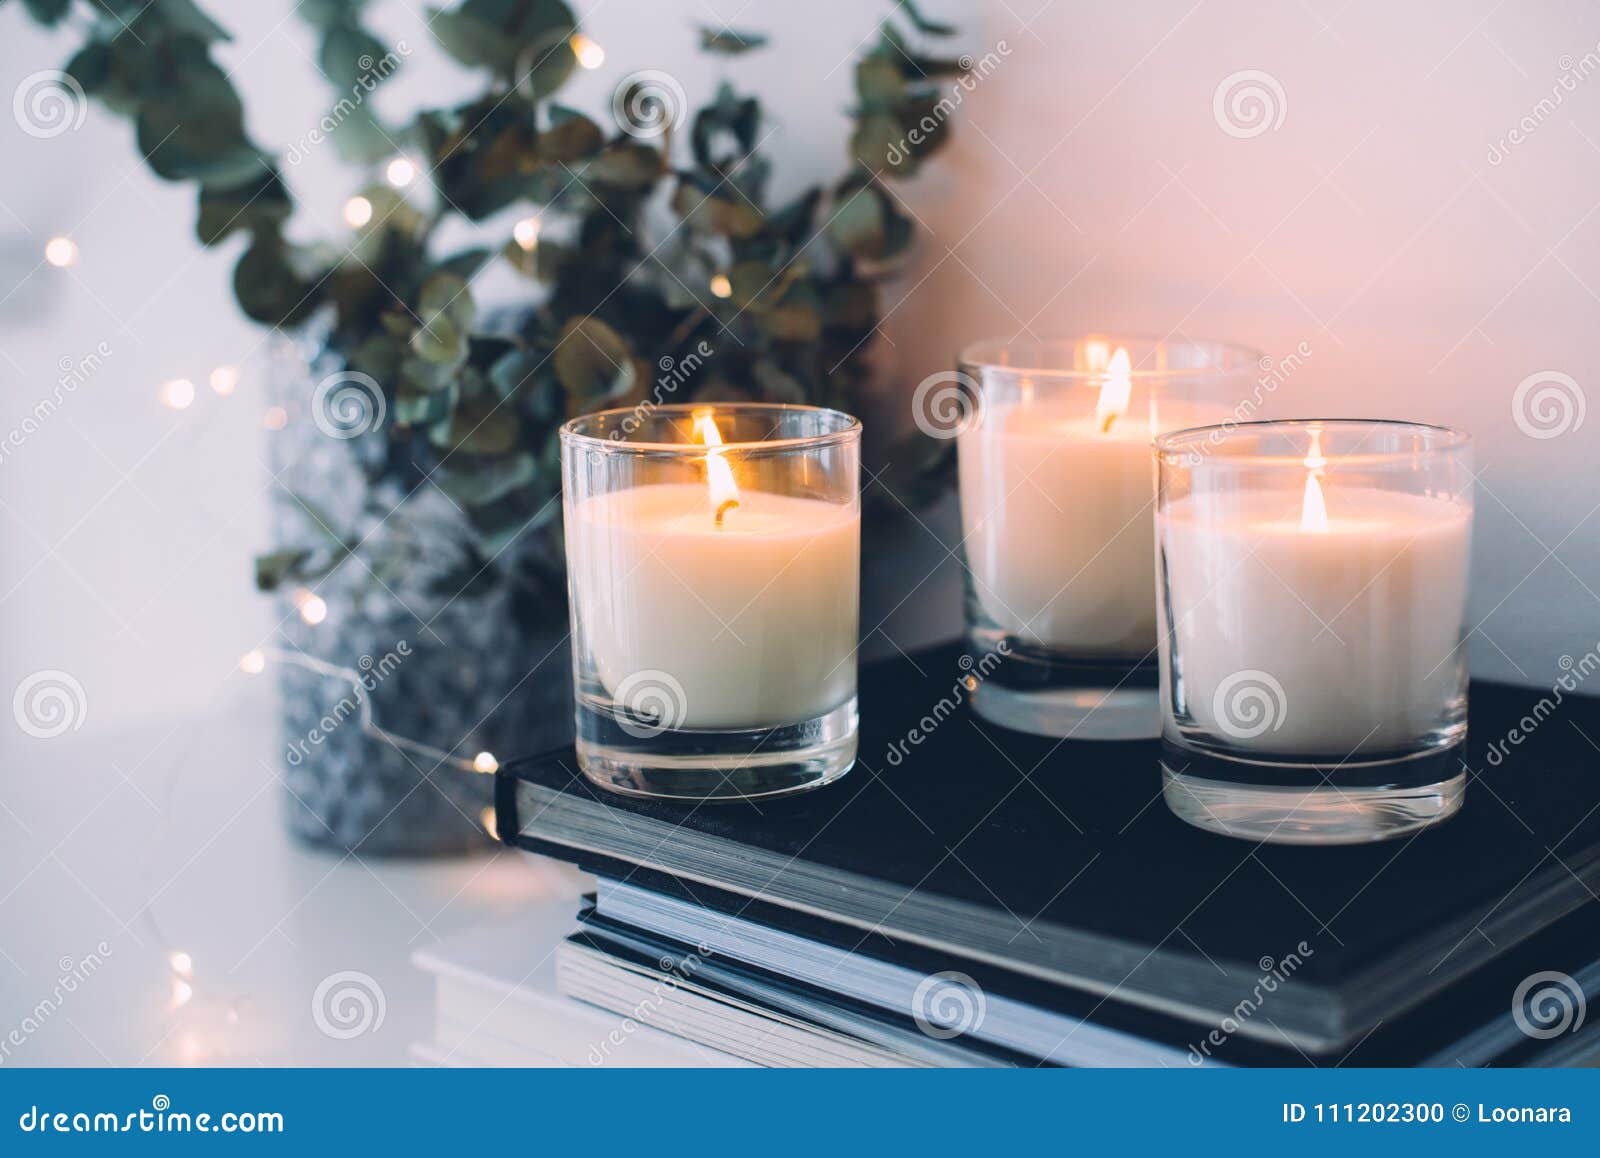 cozy home interior decor, burning candles